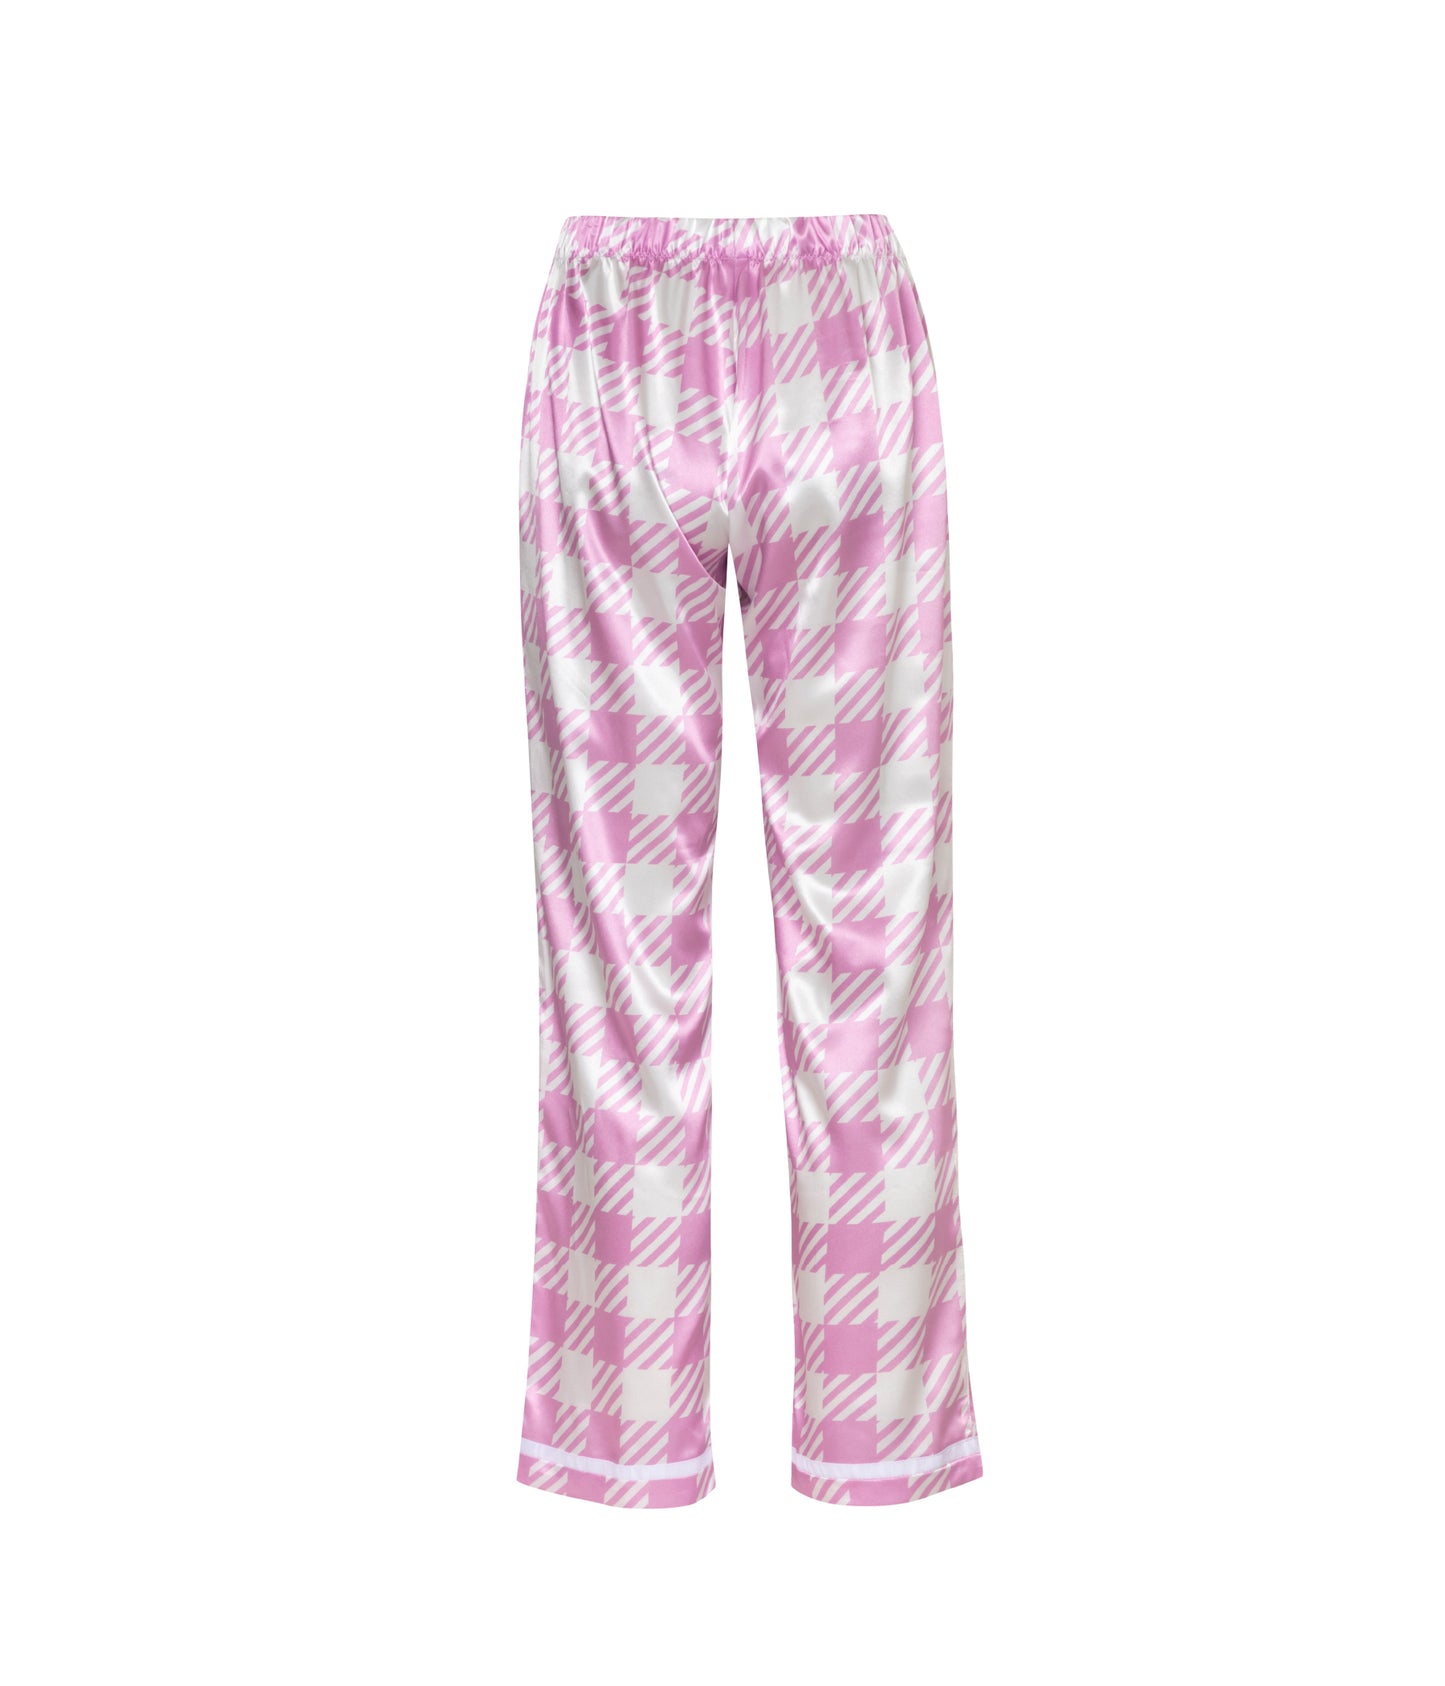 Verdelimon - Pants - Maui - Printed - Pink Squares - Back